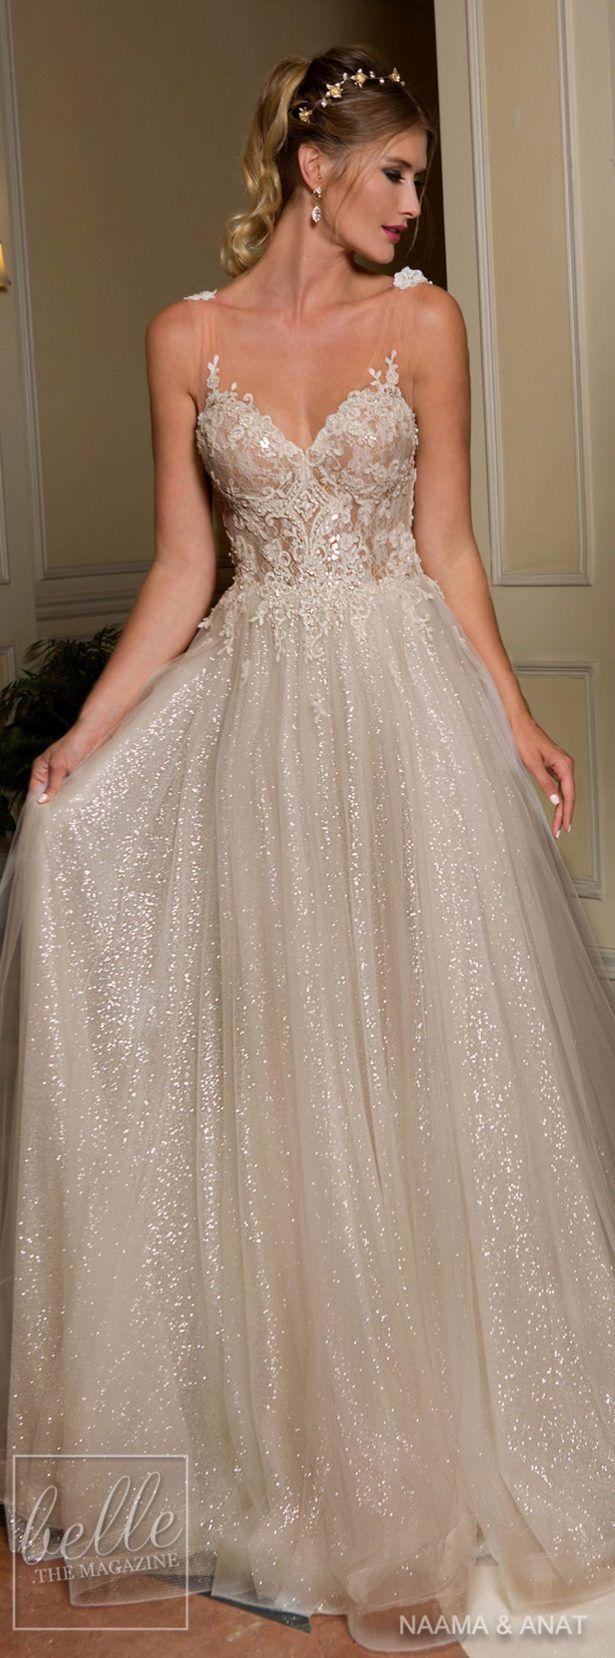 زفاف - Naama & Anat 2018 Wedding Dresses - "Starlight" Bridal Collection